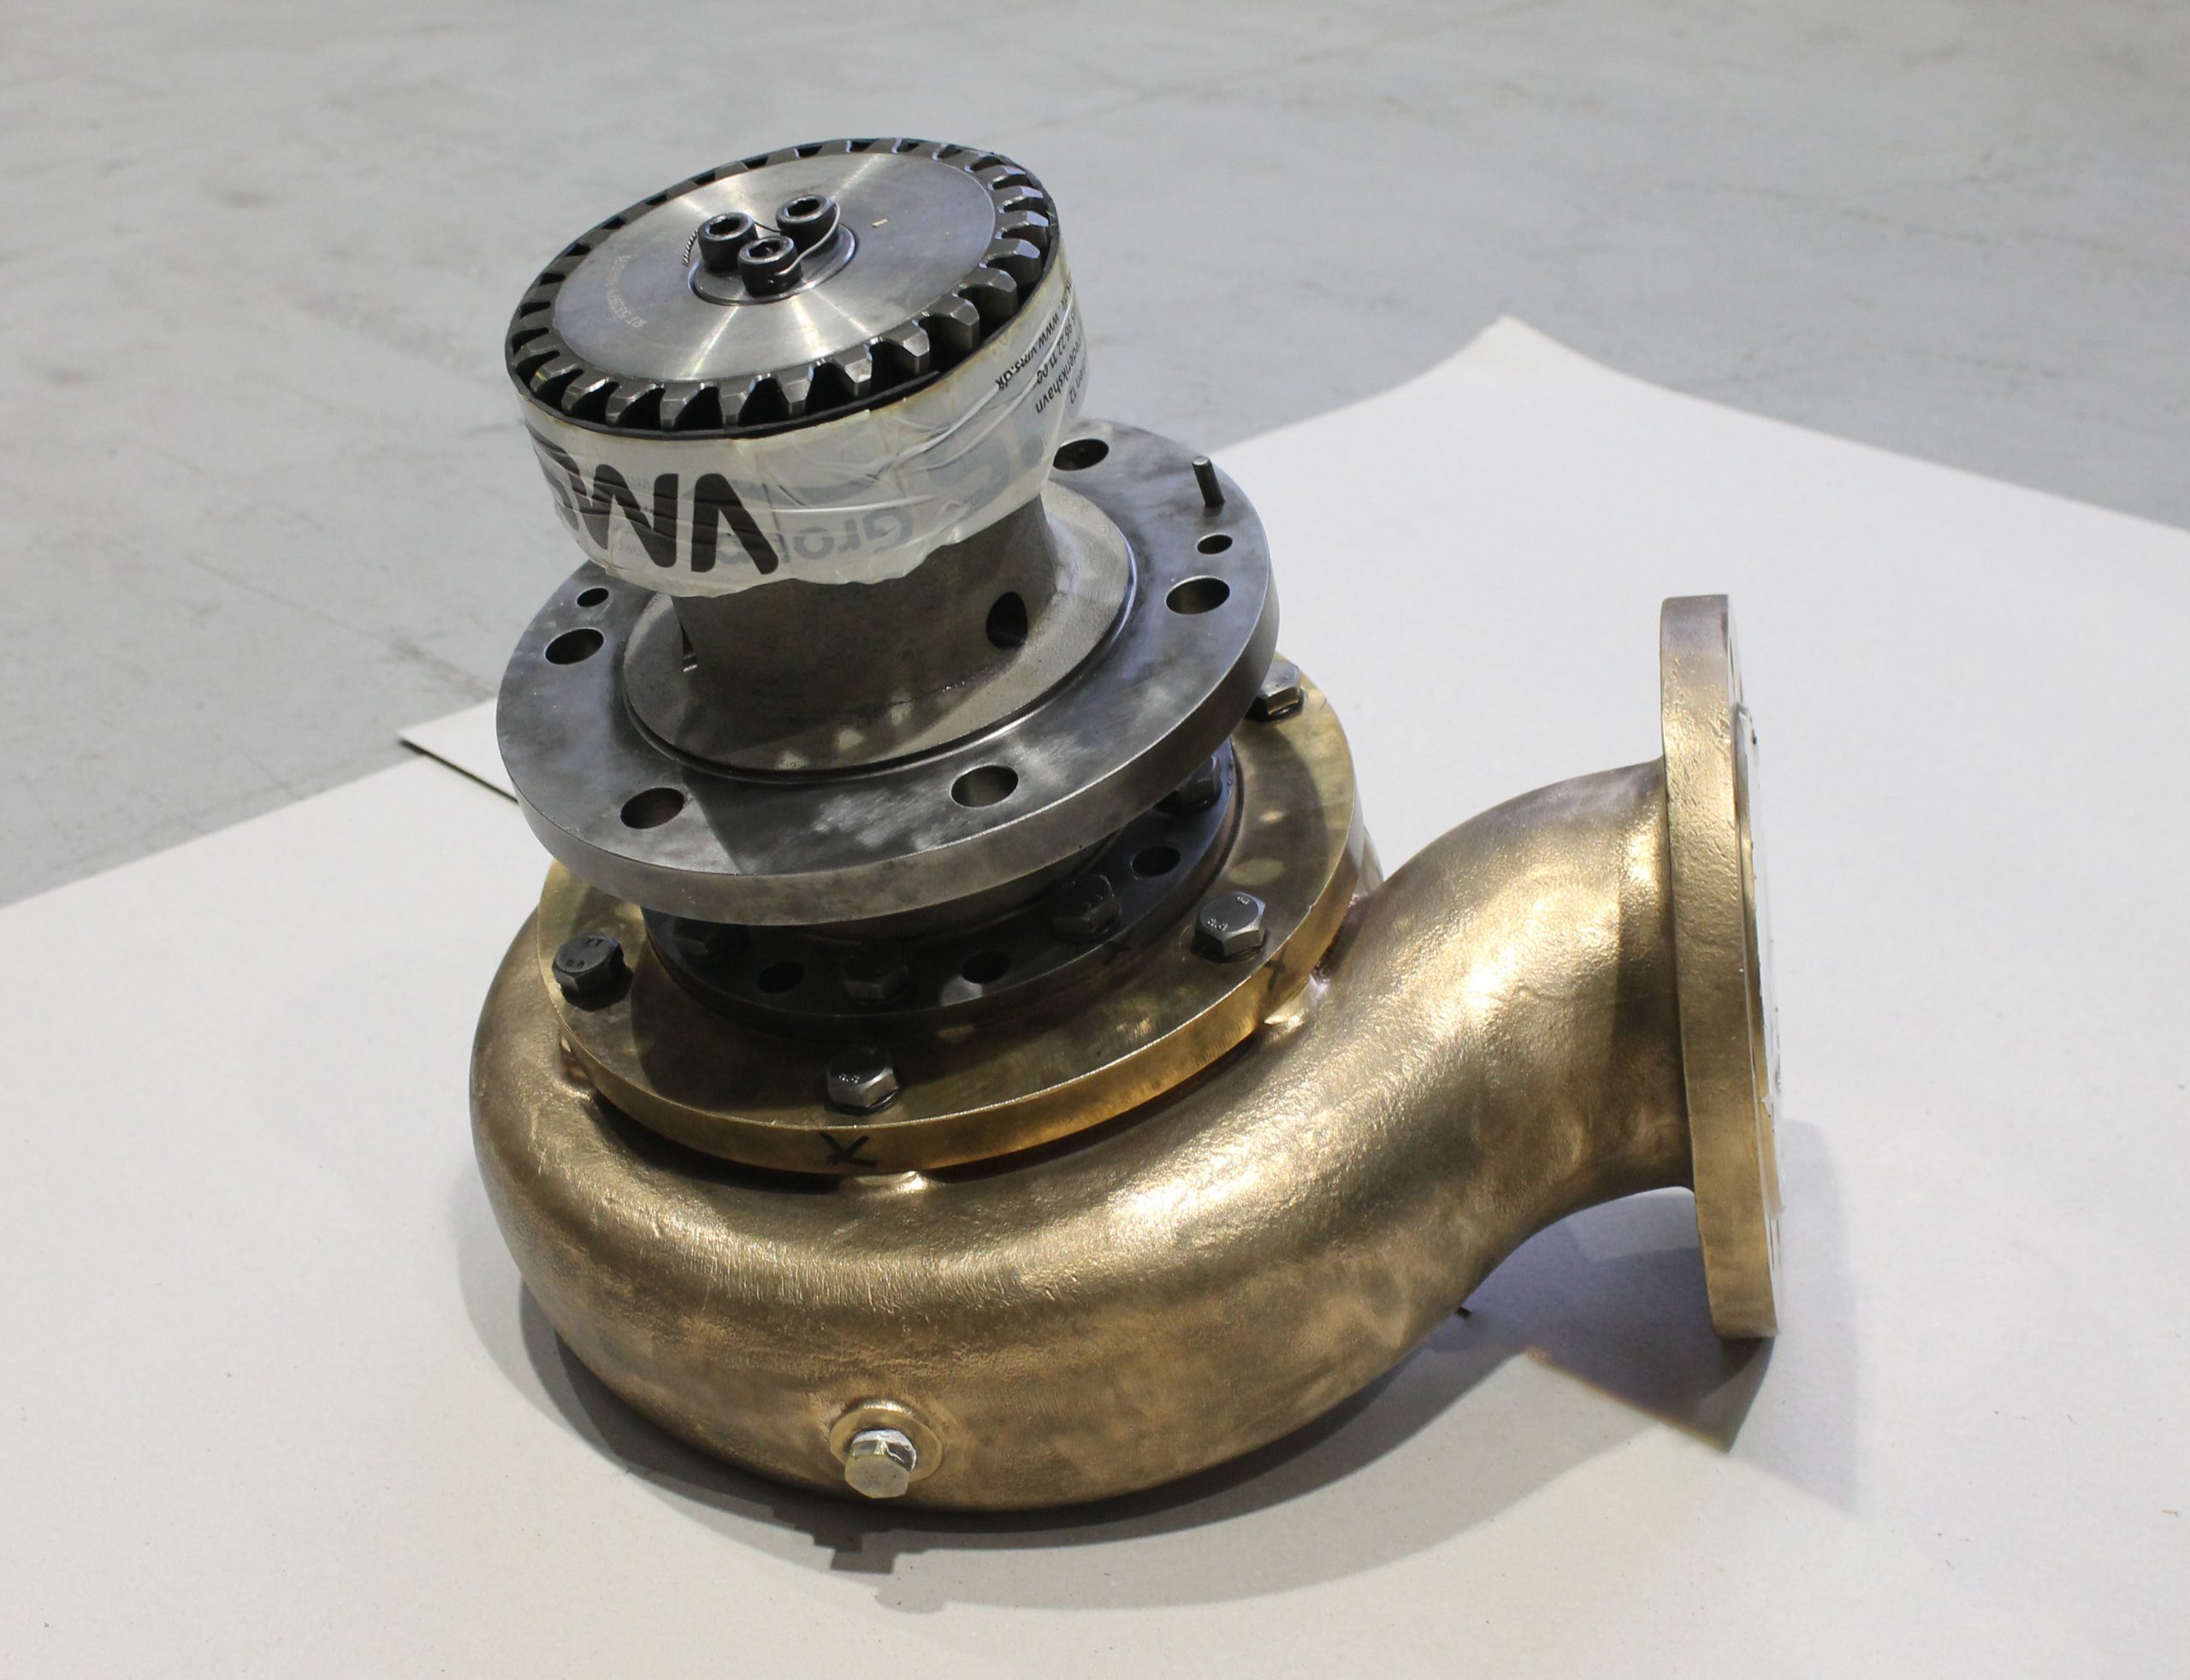 Water pump, CW engine